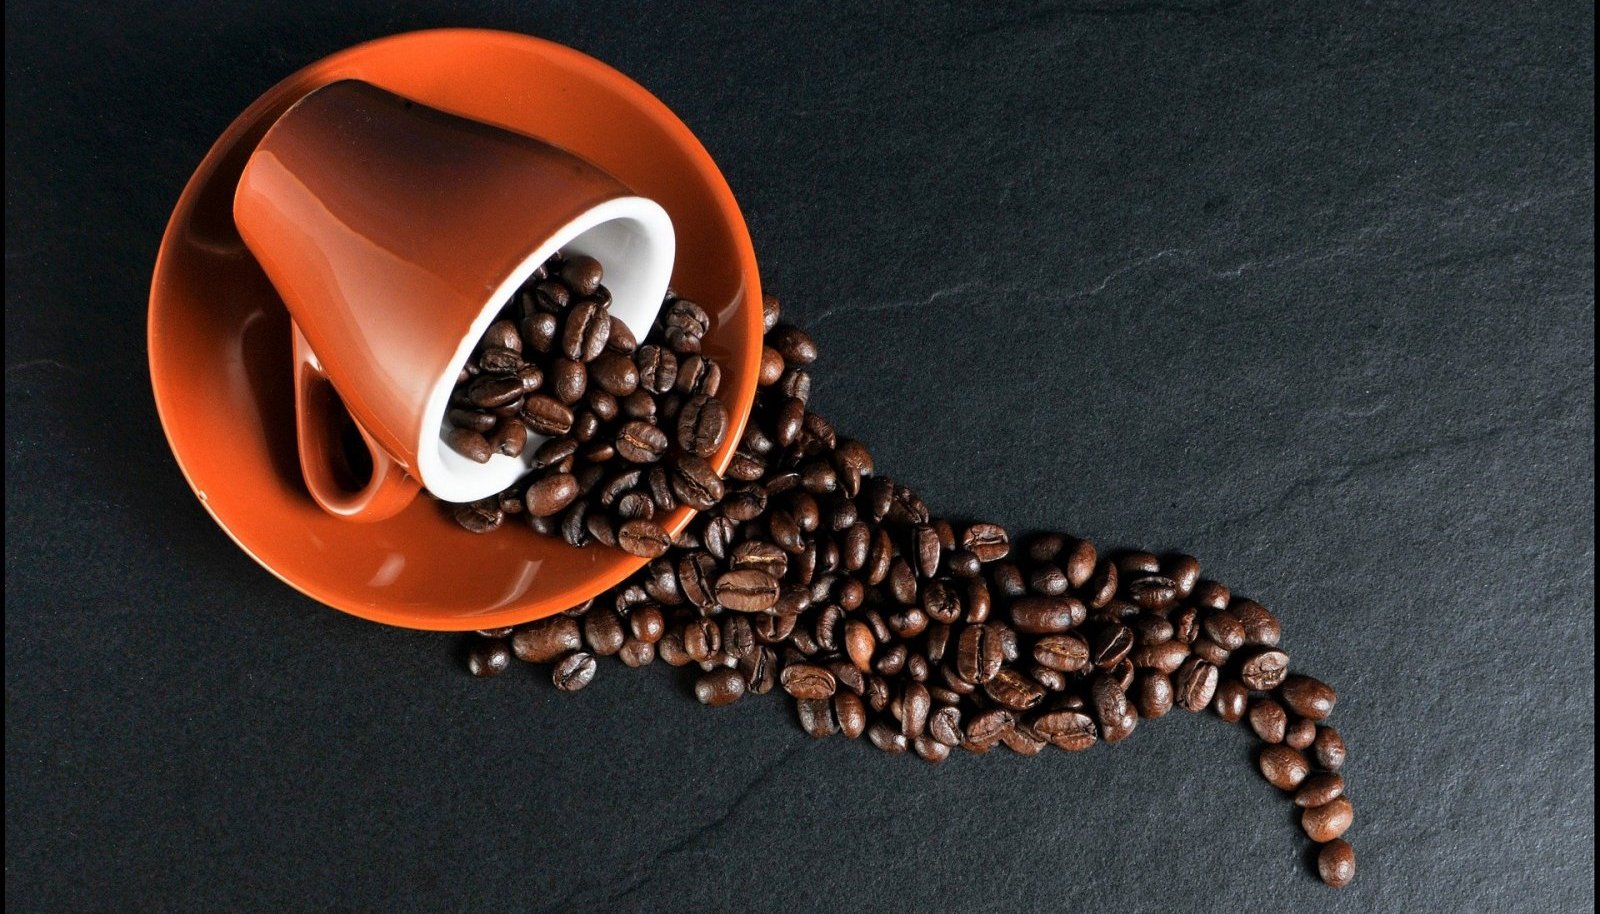 kookospahklioli kohvi poletada rasva